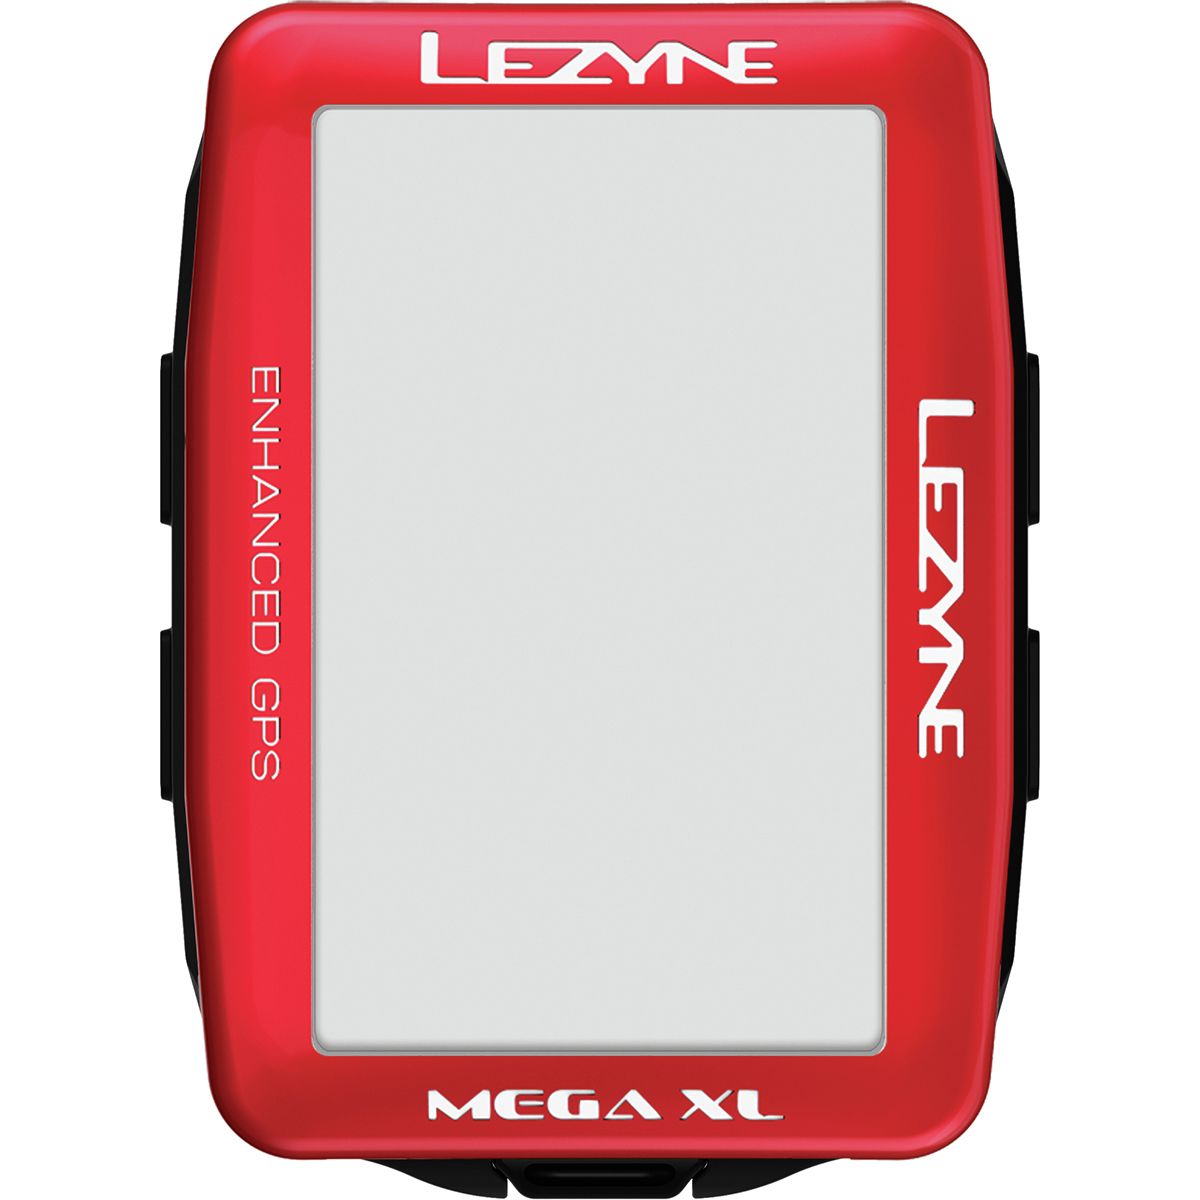 Lezyne Mega XL Limited Holiday Edition GPS Bike Computer